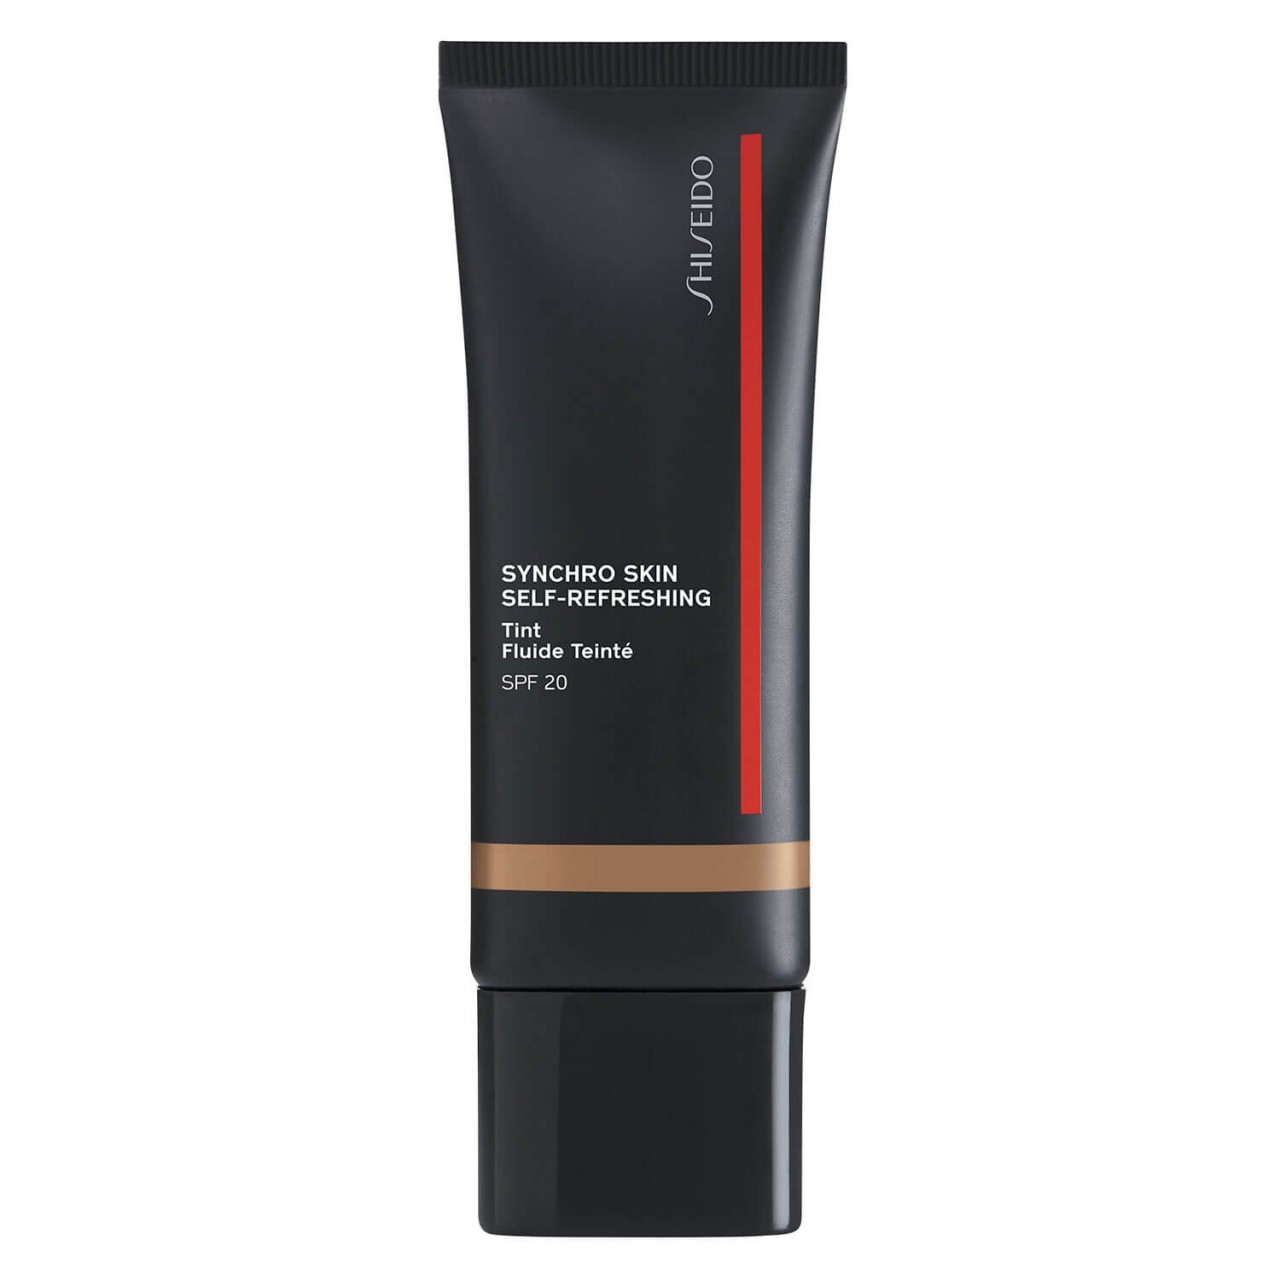 Synchro Skin Self-Refreshing - Tint SPF 20 Medium Katsura 335 von Shiseido